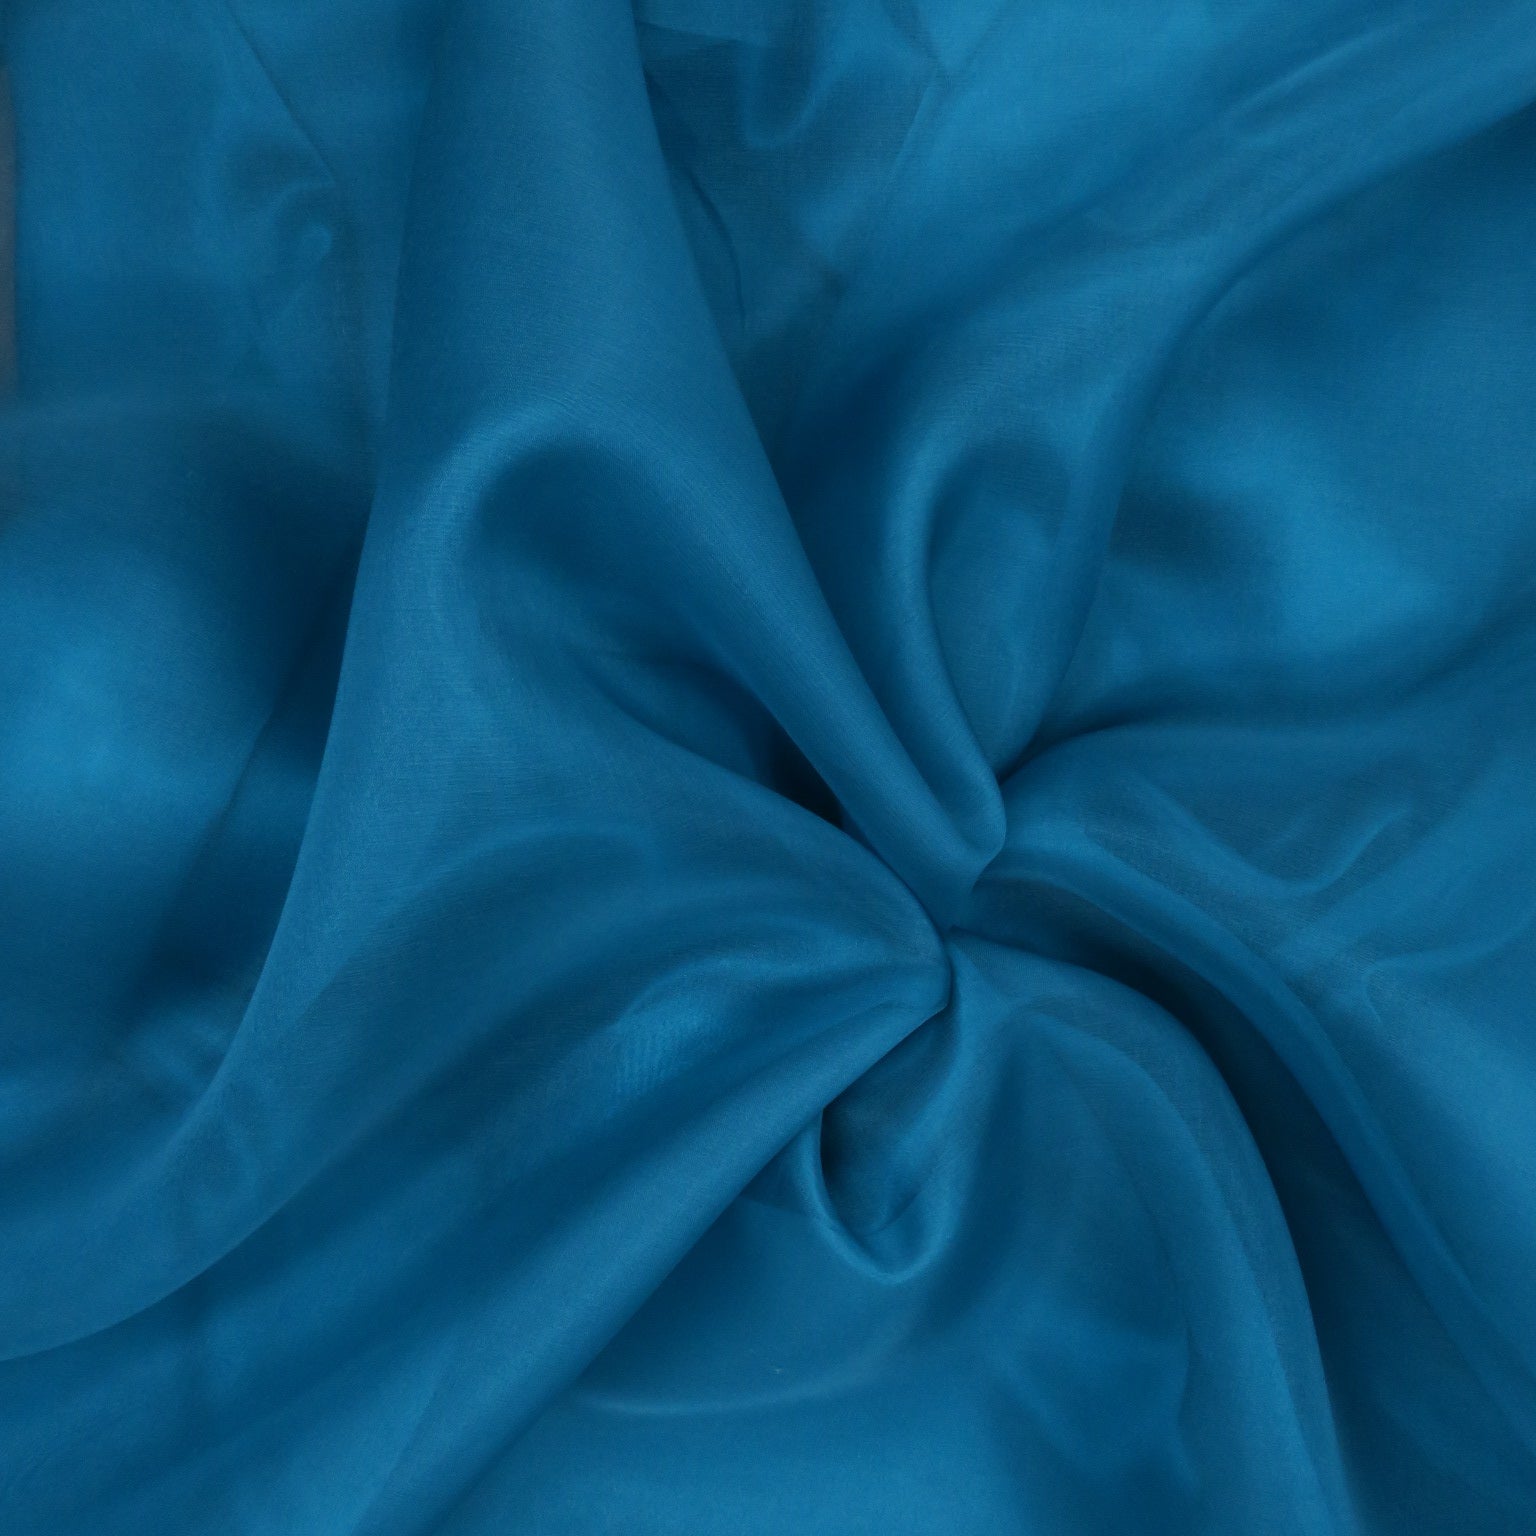 Solid Teal Silk Organza Fabric 54 8mm